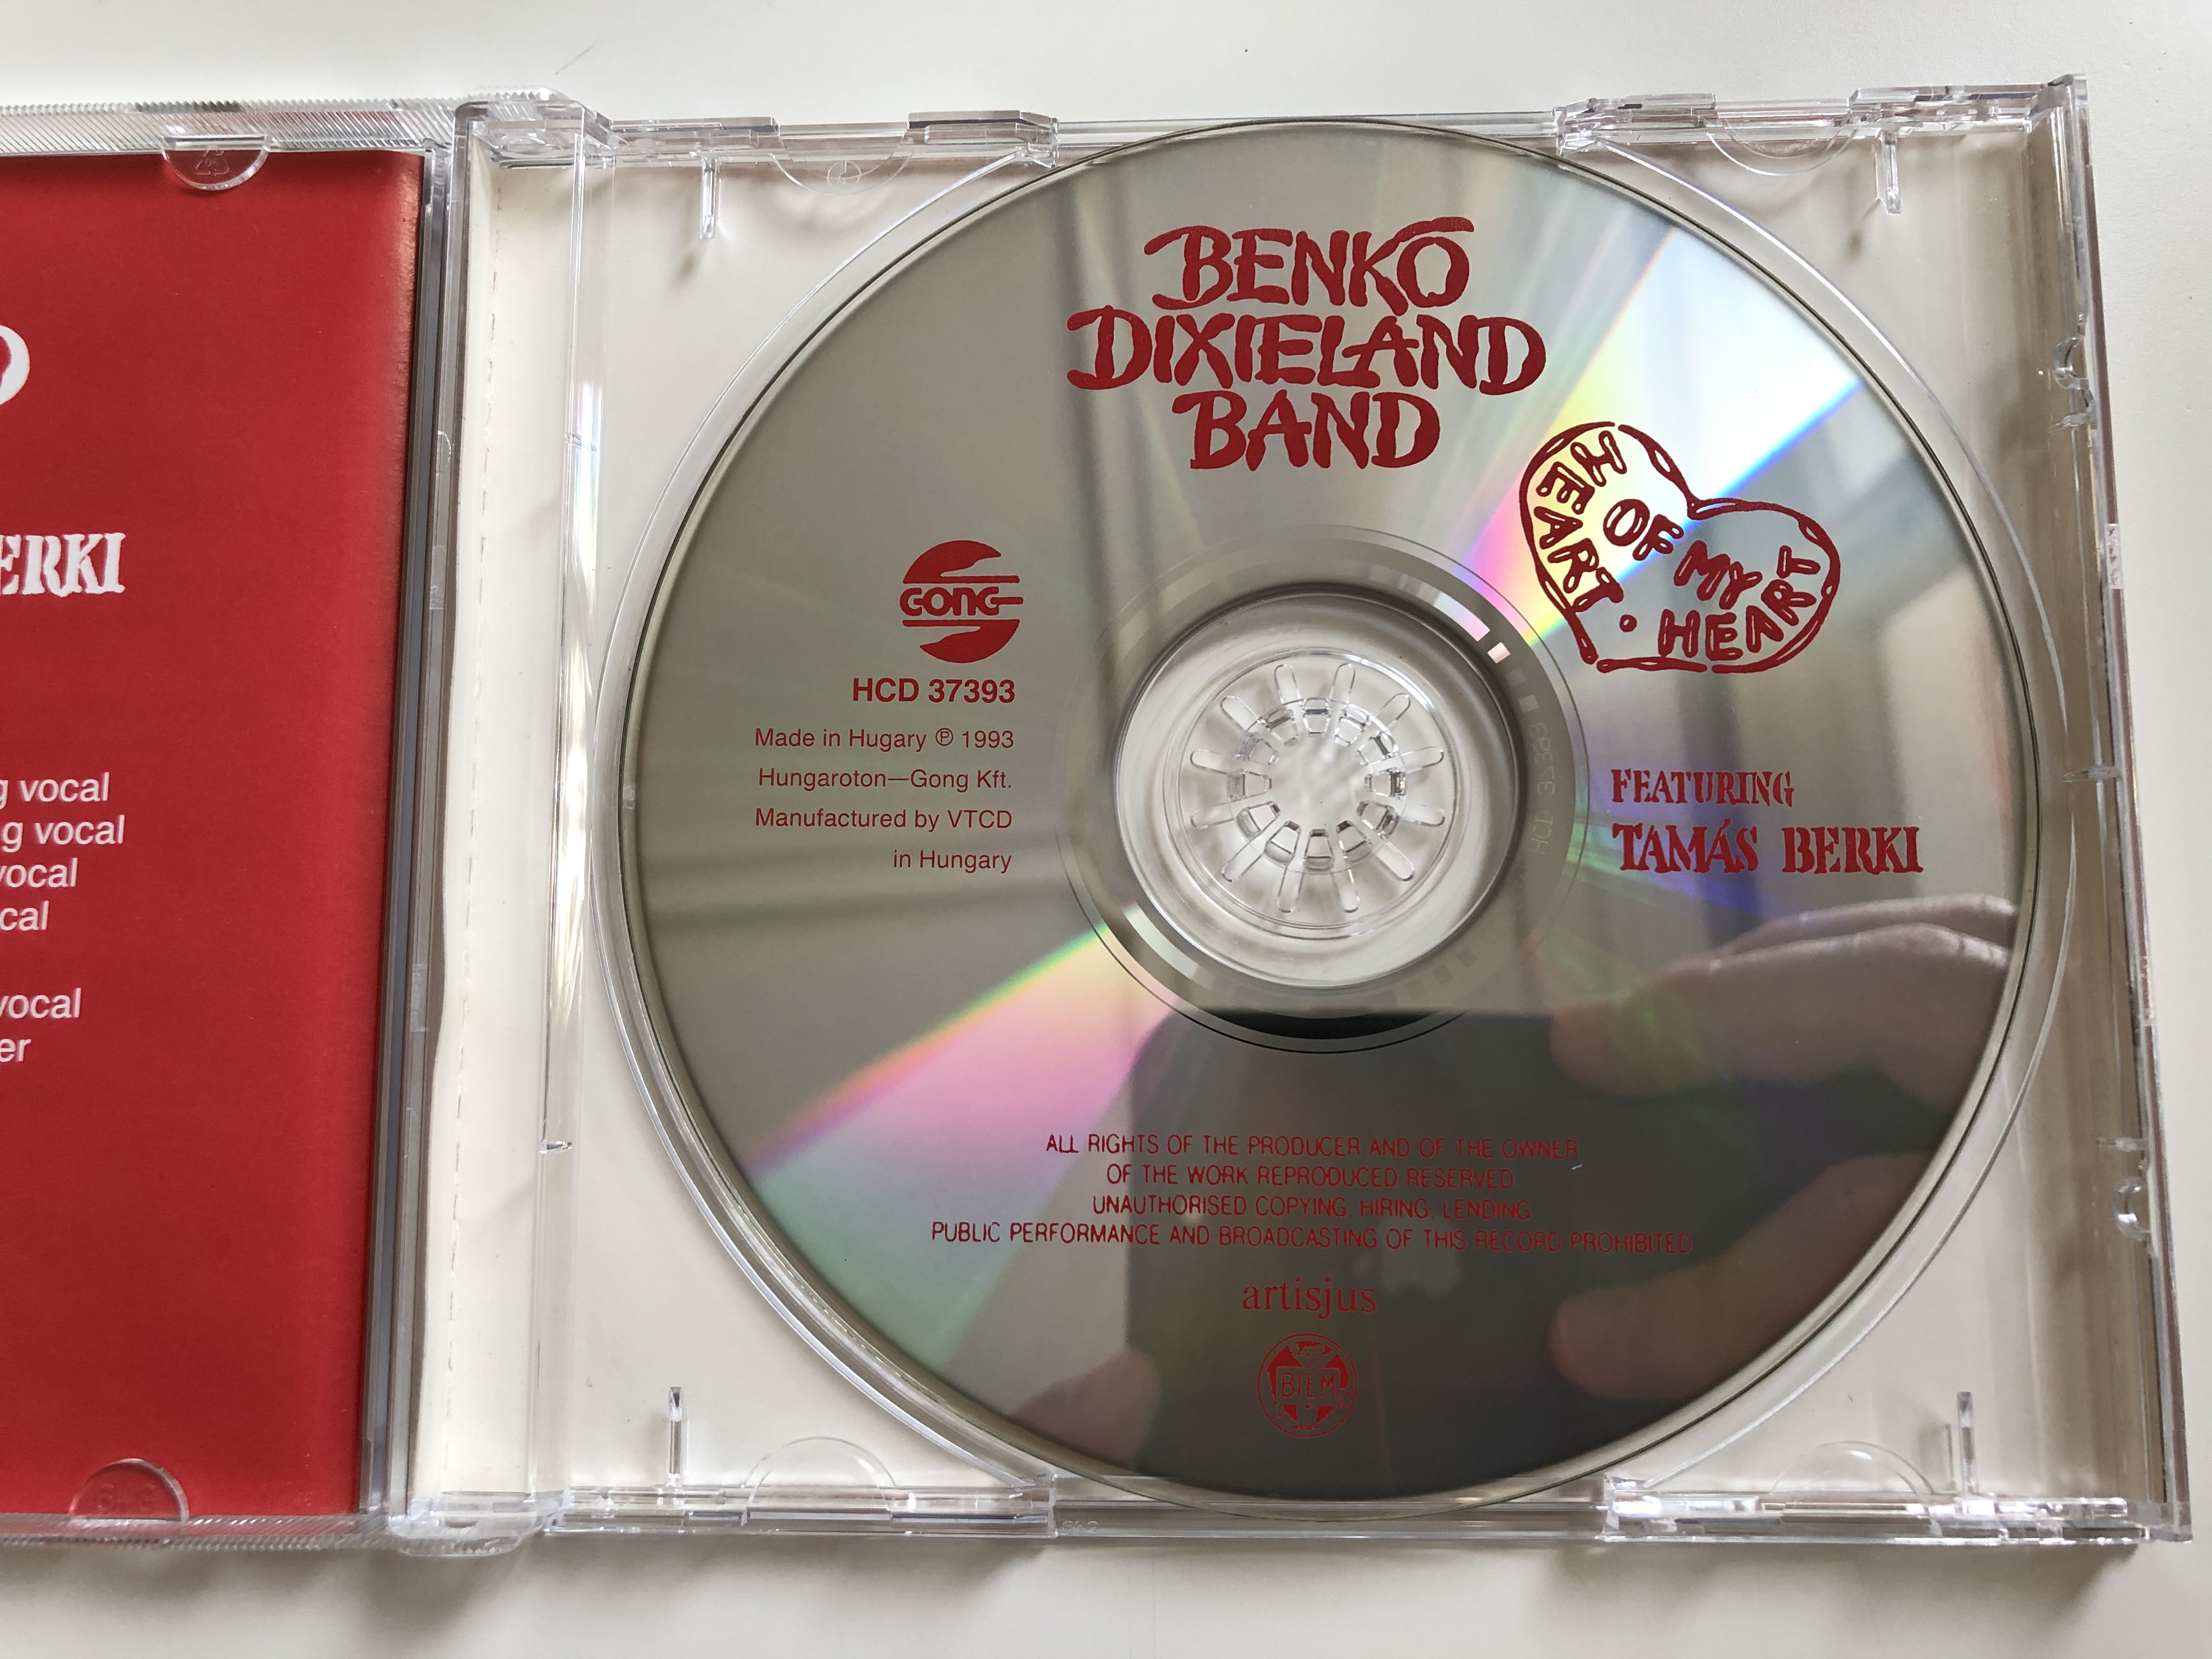 benk-dixieland-band-heart-of-my-heart-featuring-tamas-berki-krem-audio-cd-1993-hcd-37393-4-.jpg